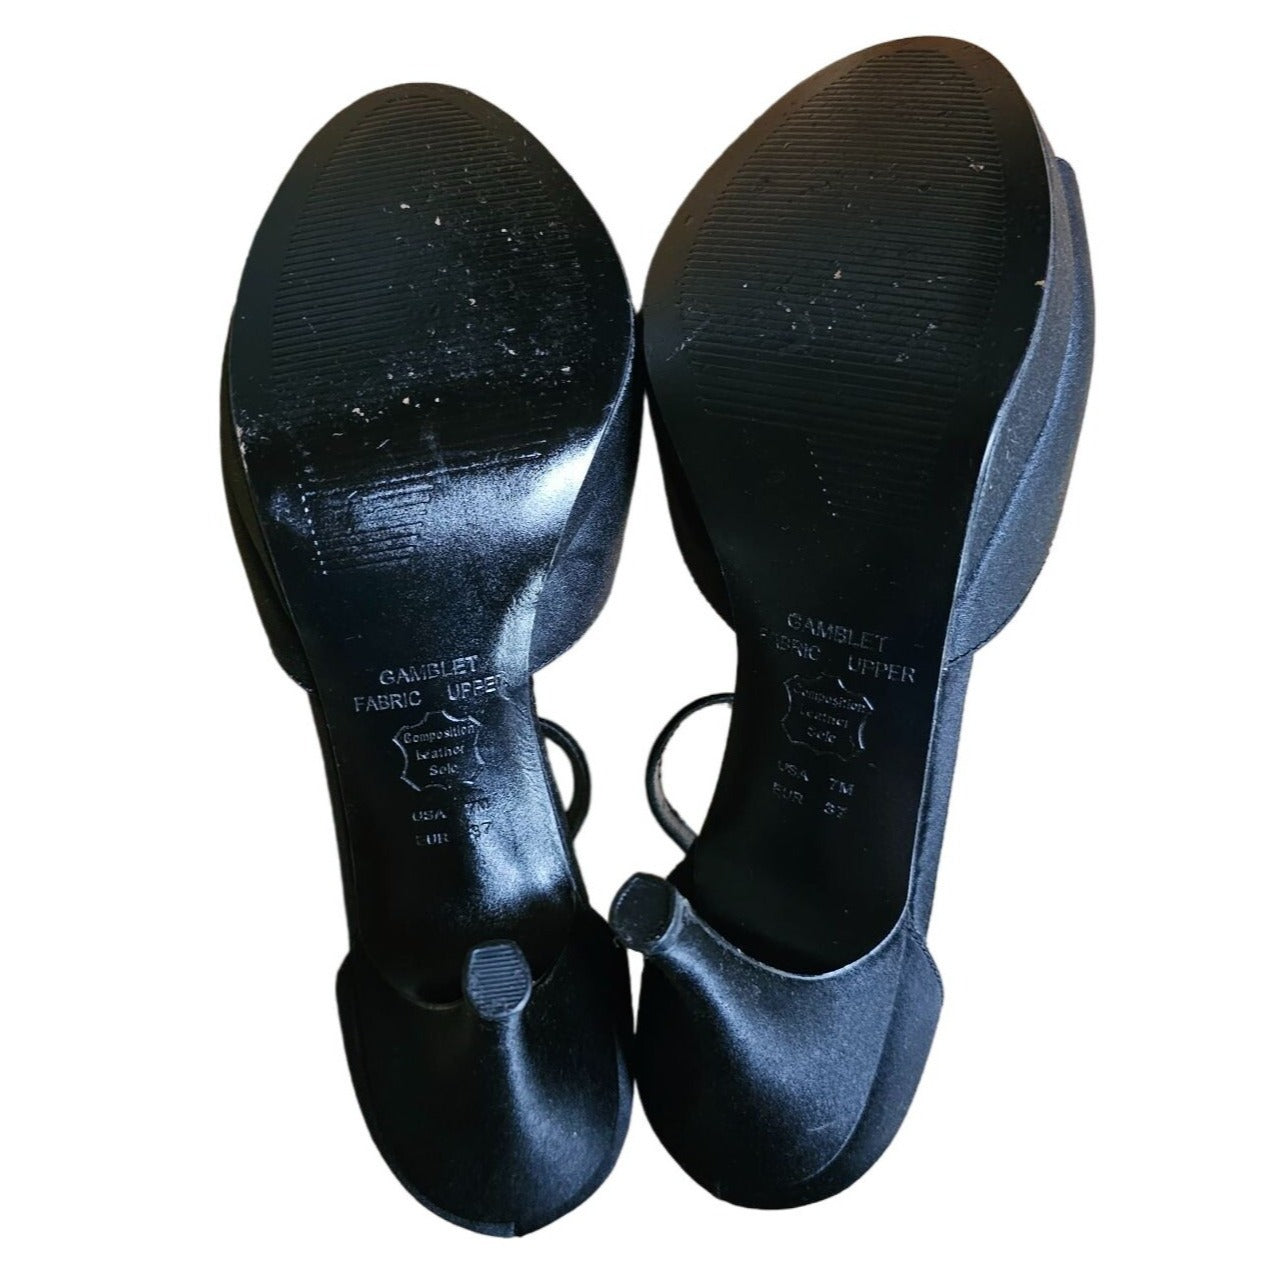 Touch of Nina Black Satin Women's Platform High Heels Dress Formal Shoes, Size 7